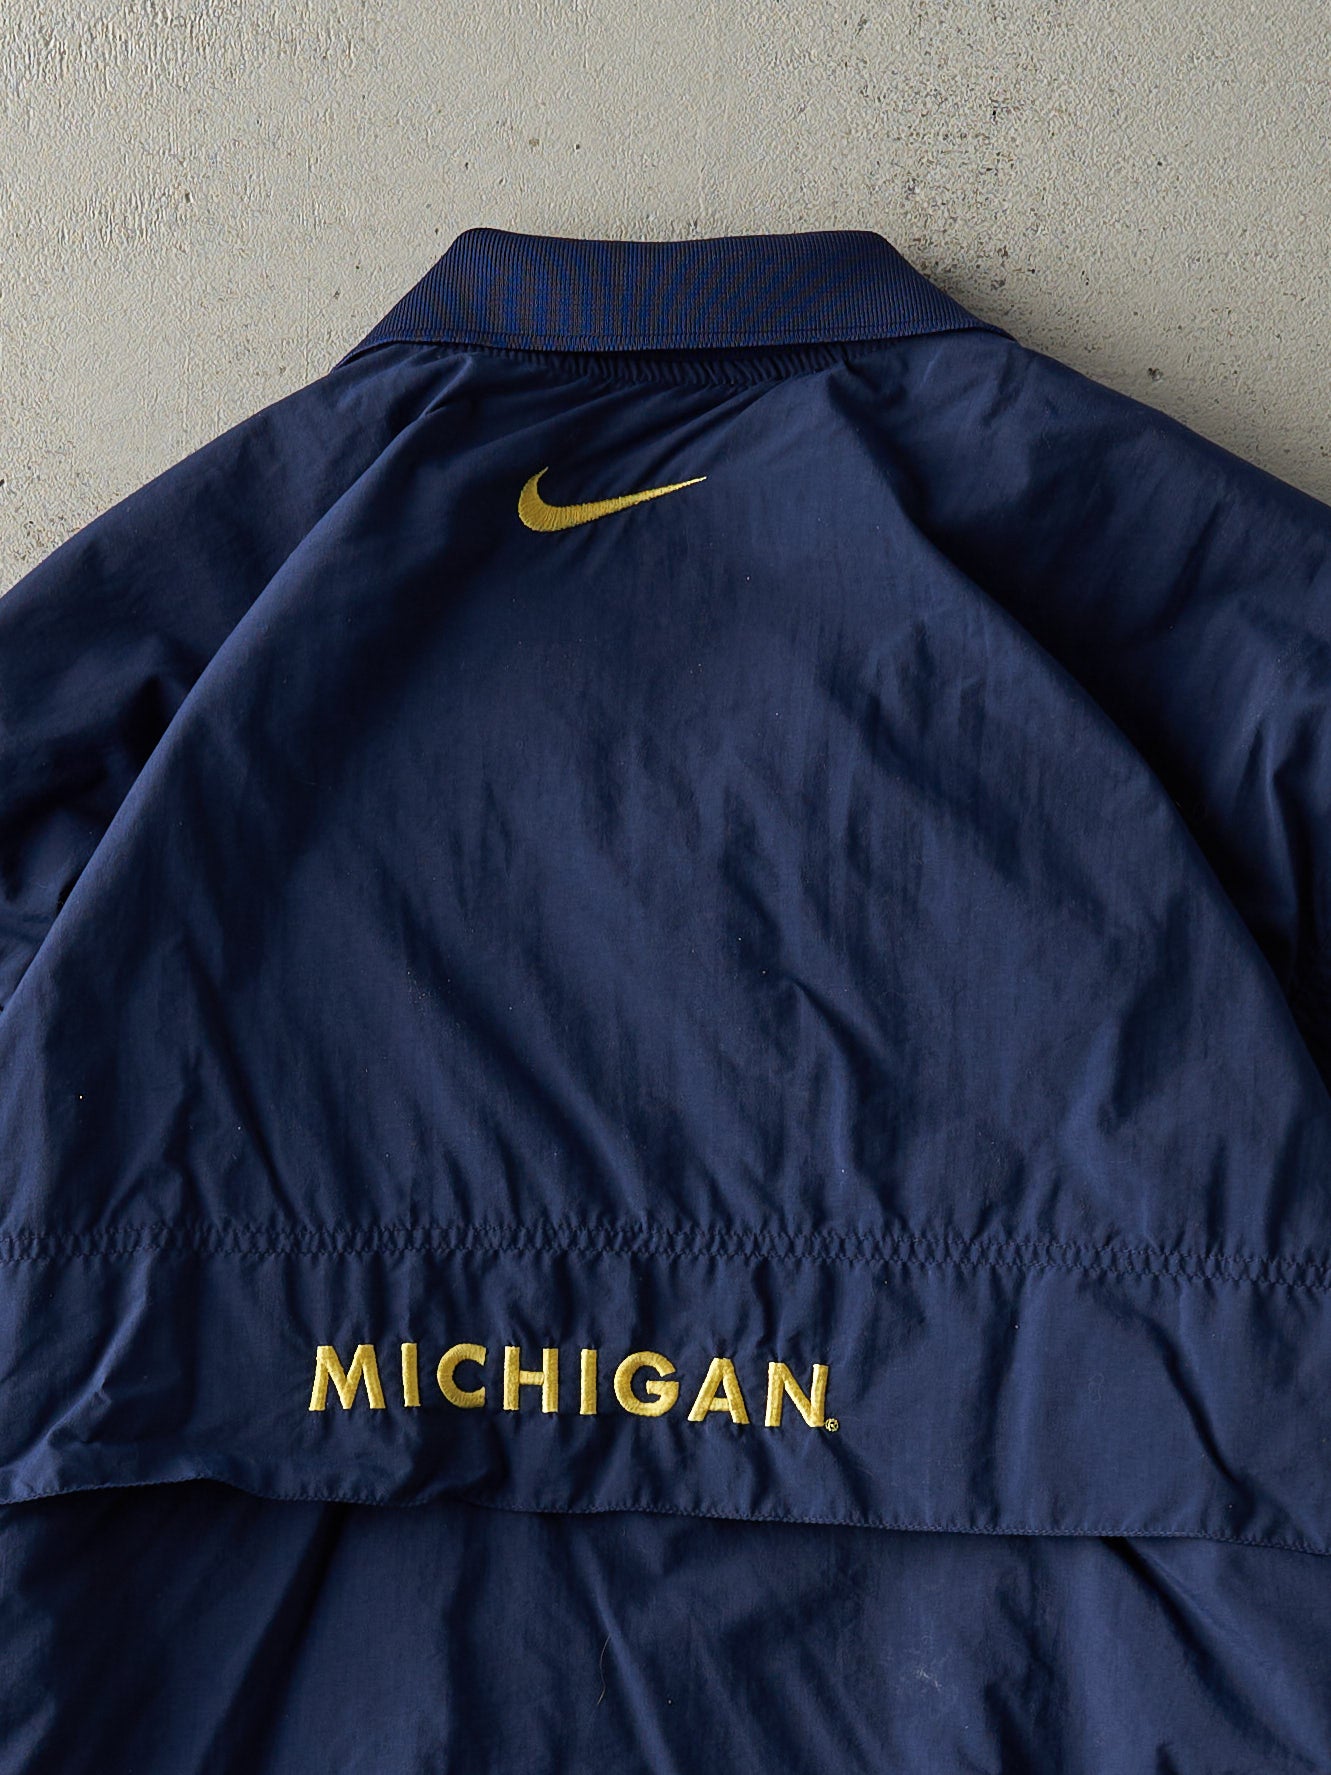 Vintage 90s Navy Blue University of Michigan Nike Quarter Zip Windbreaker (M/L)